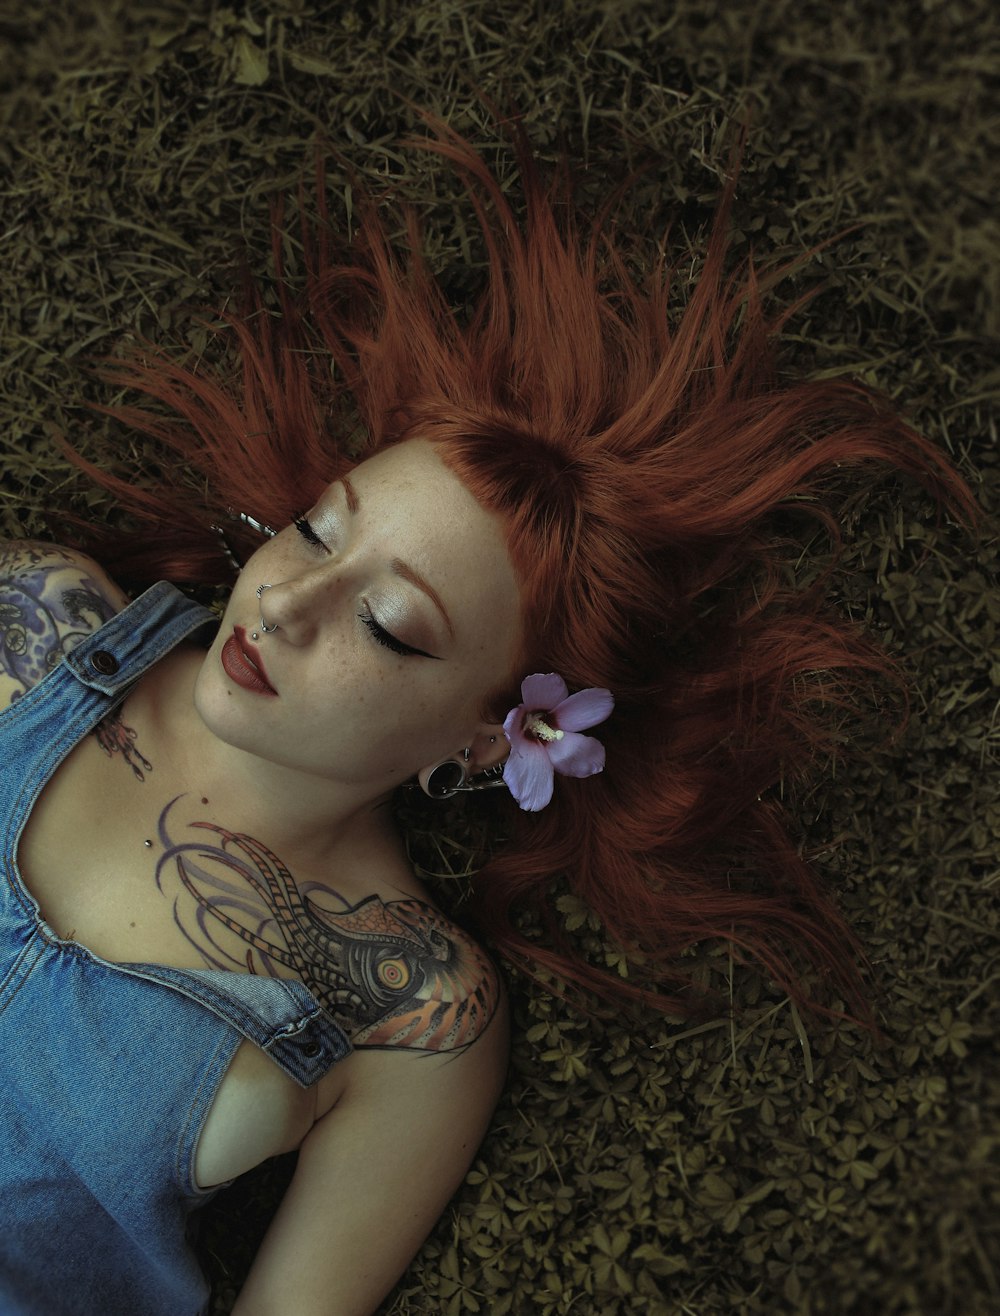 woman lying on grass